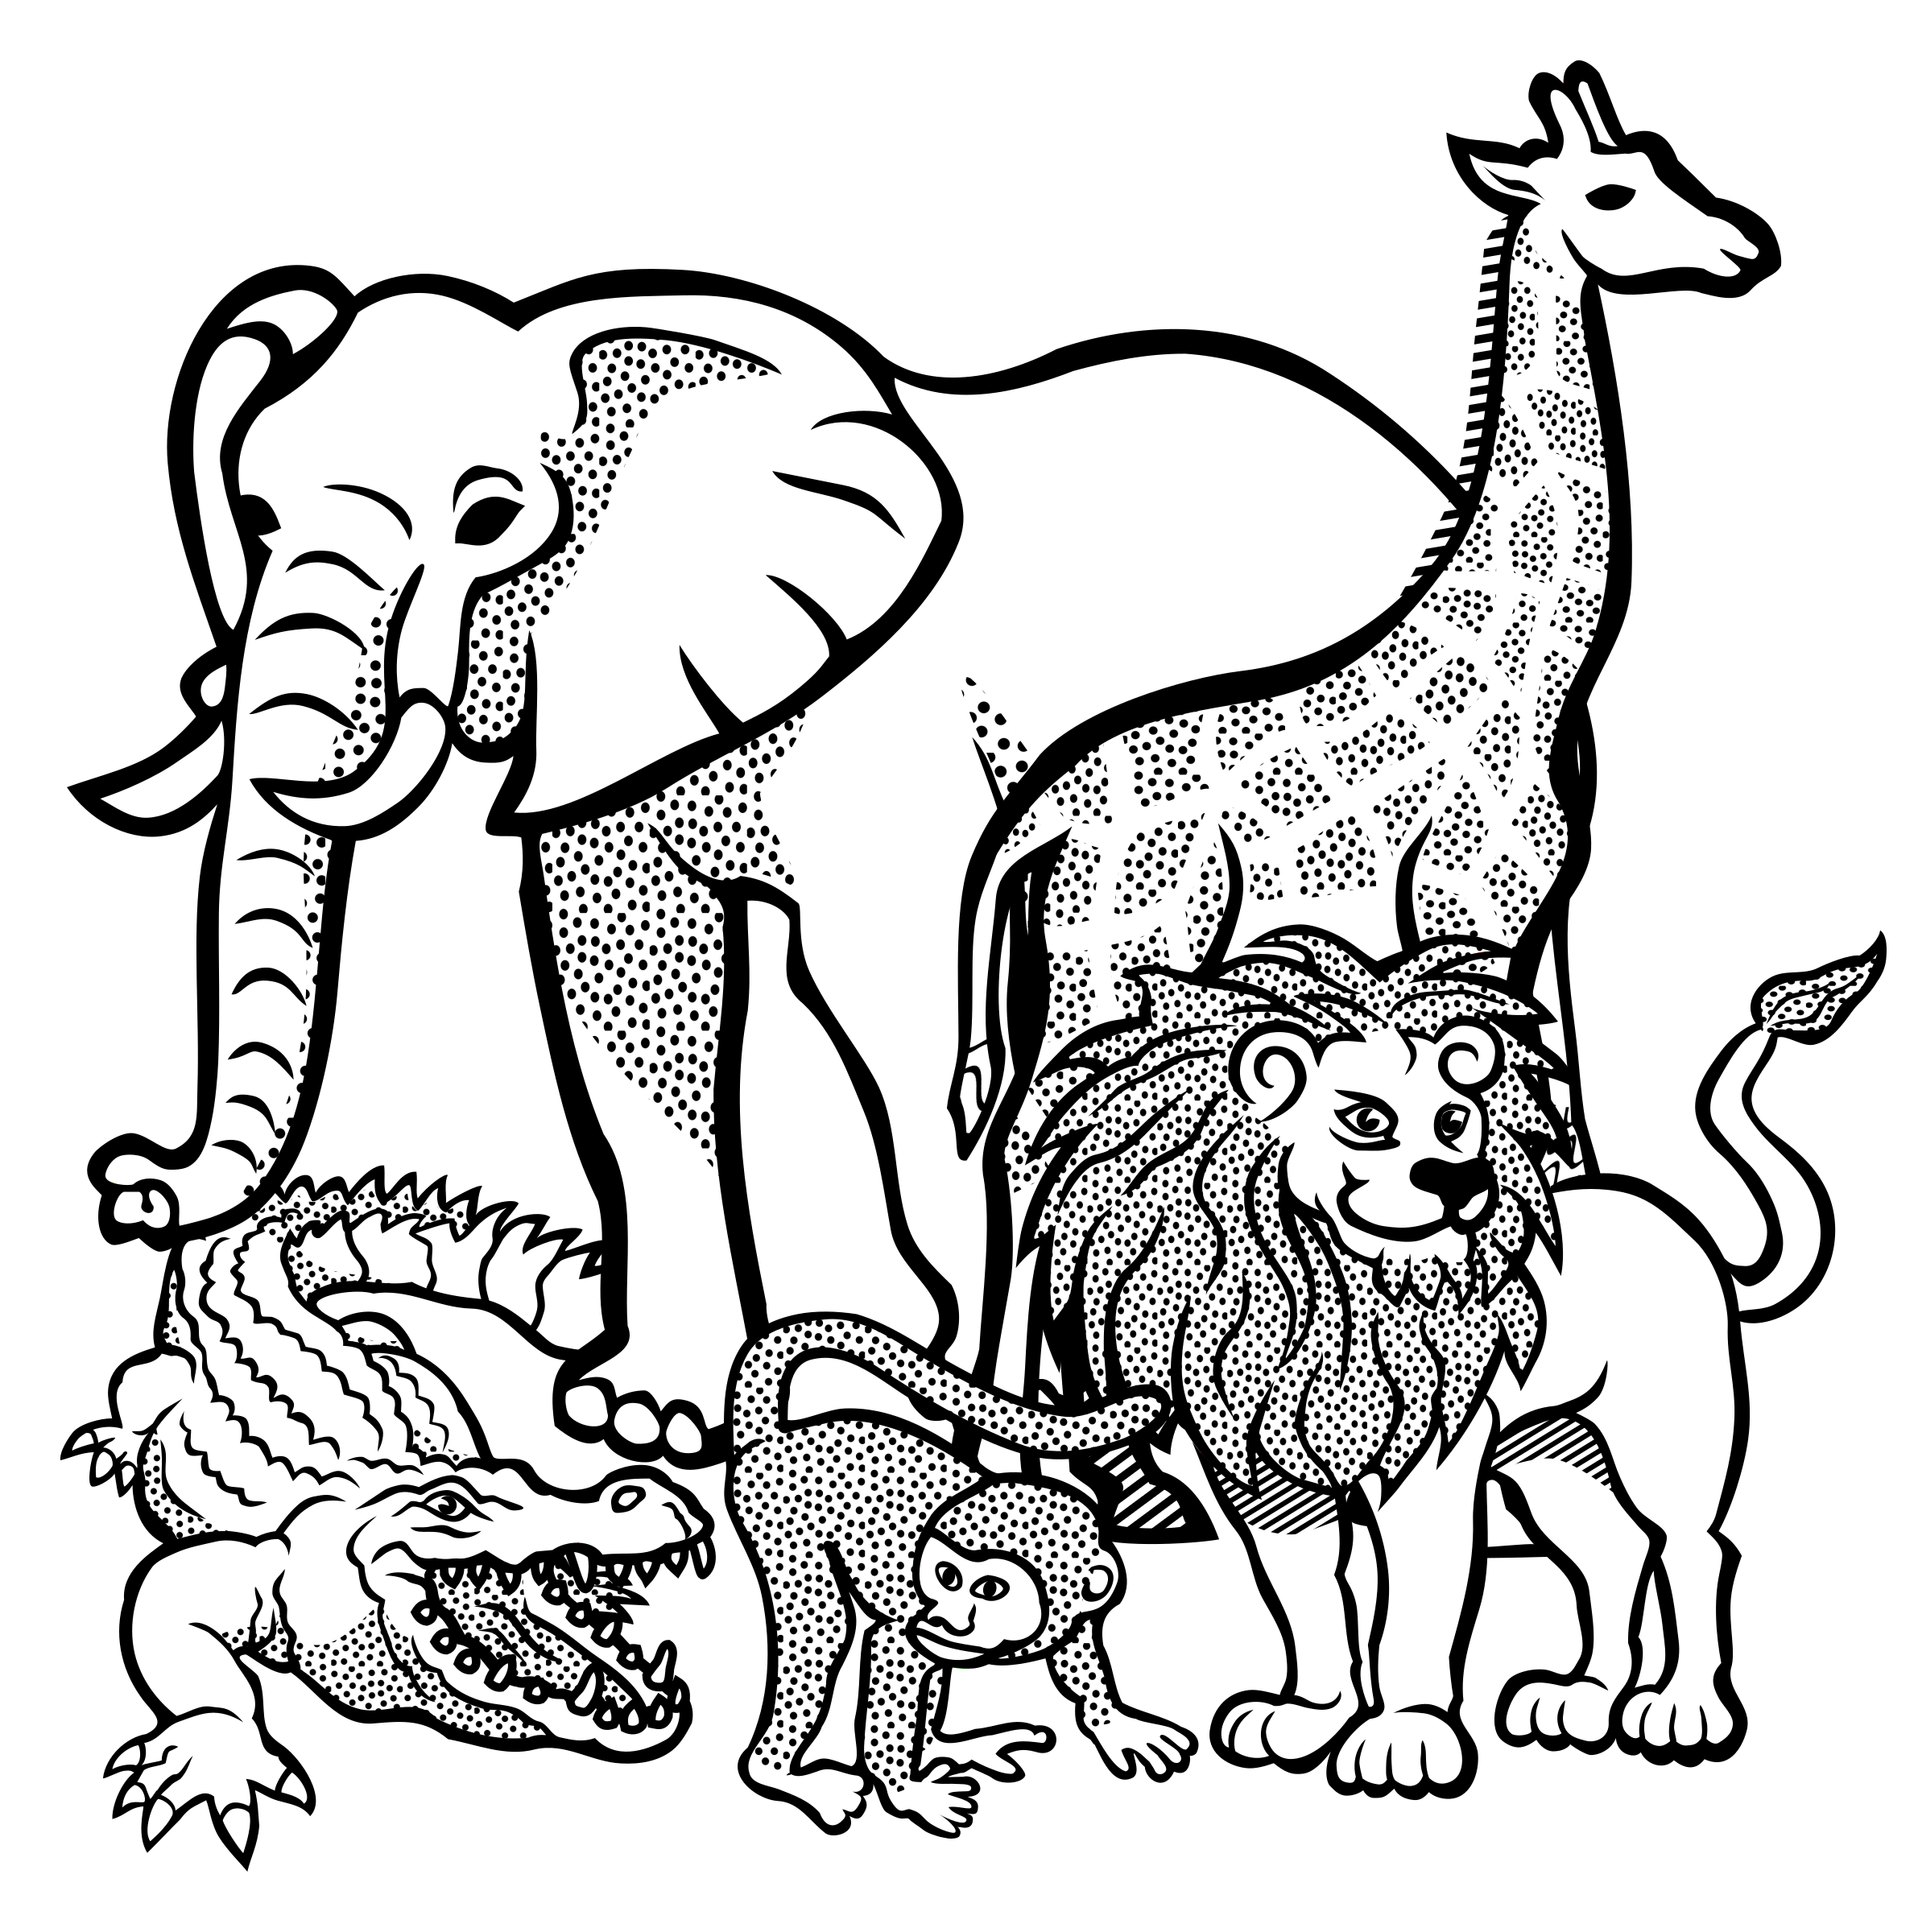 Free Jungle Animals Clipart Black And White, Download Free Jungle